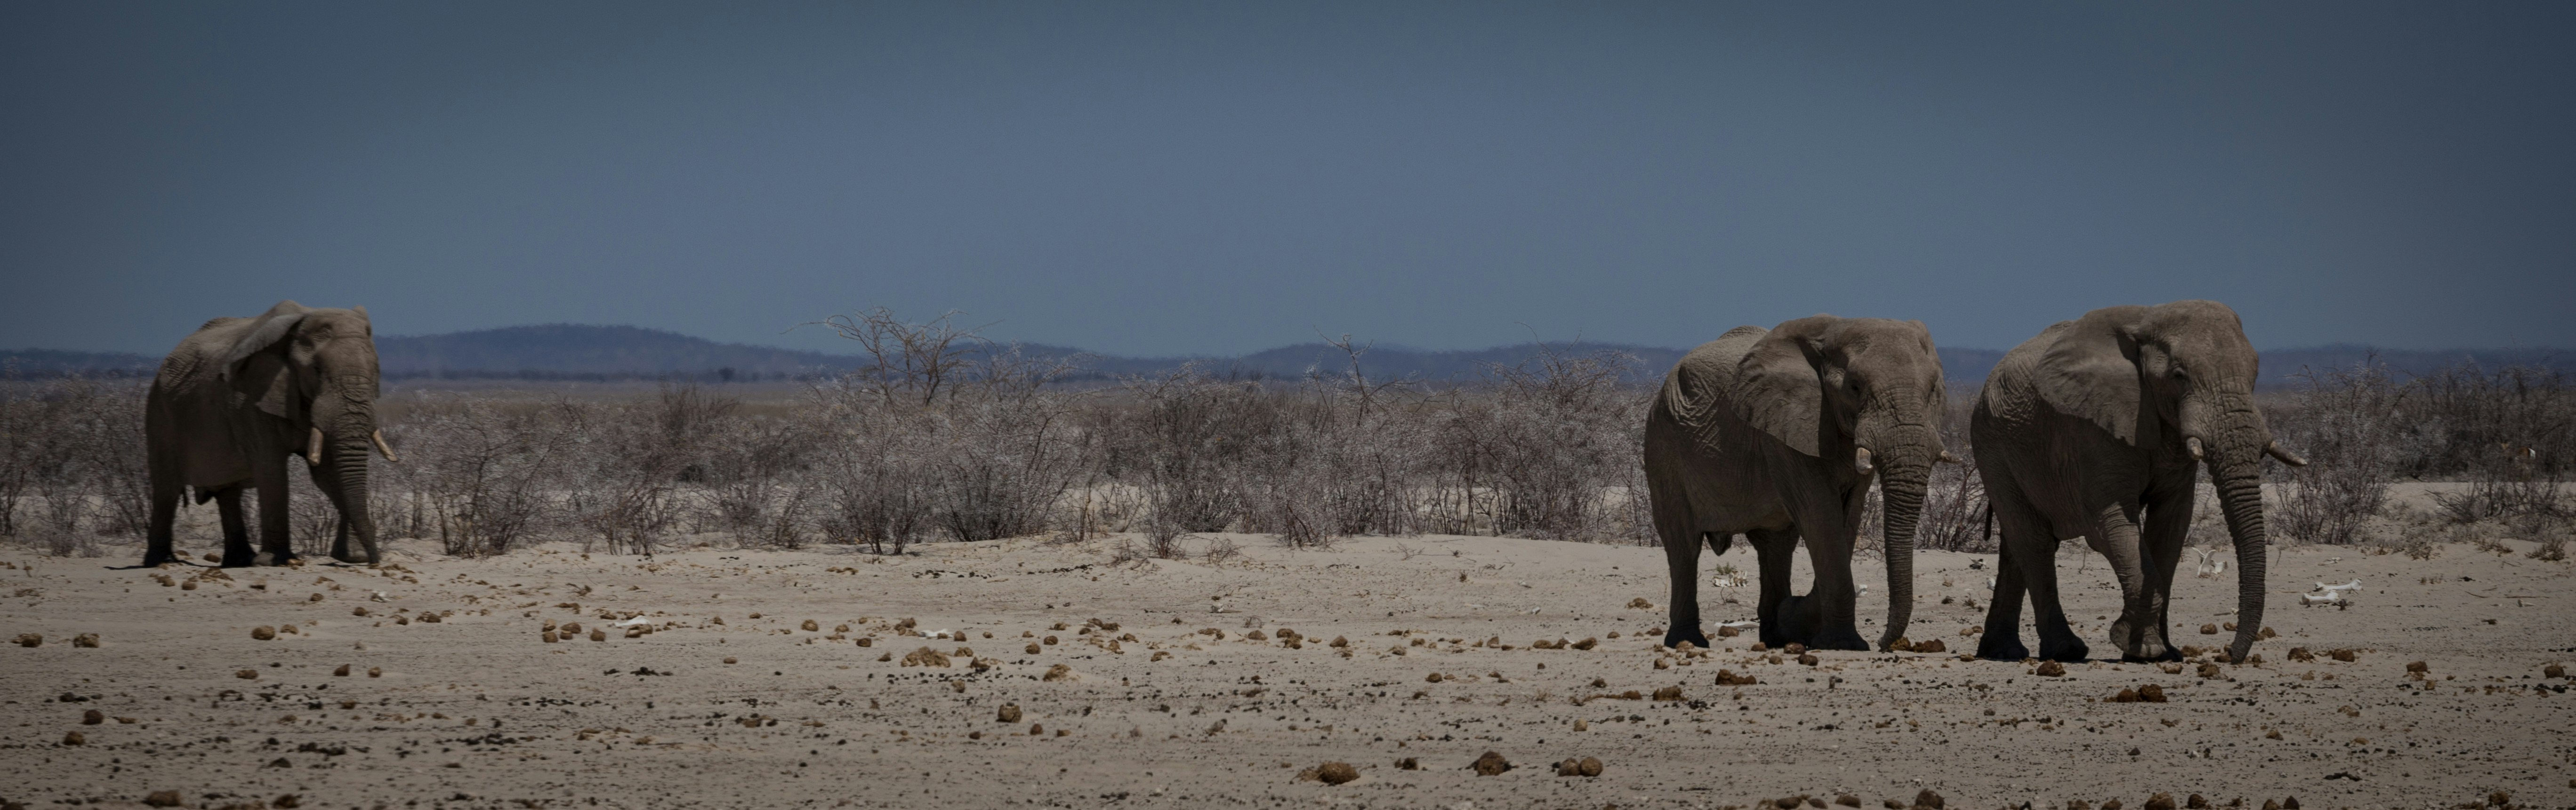 walking elephants on desert